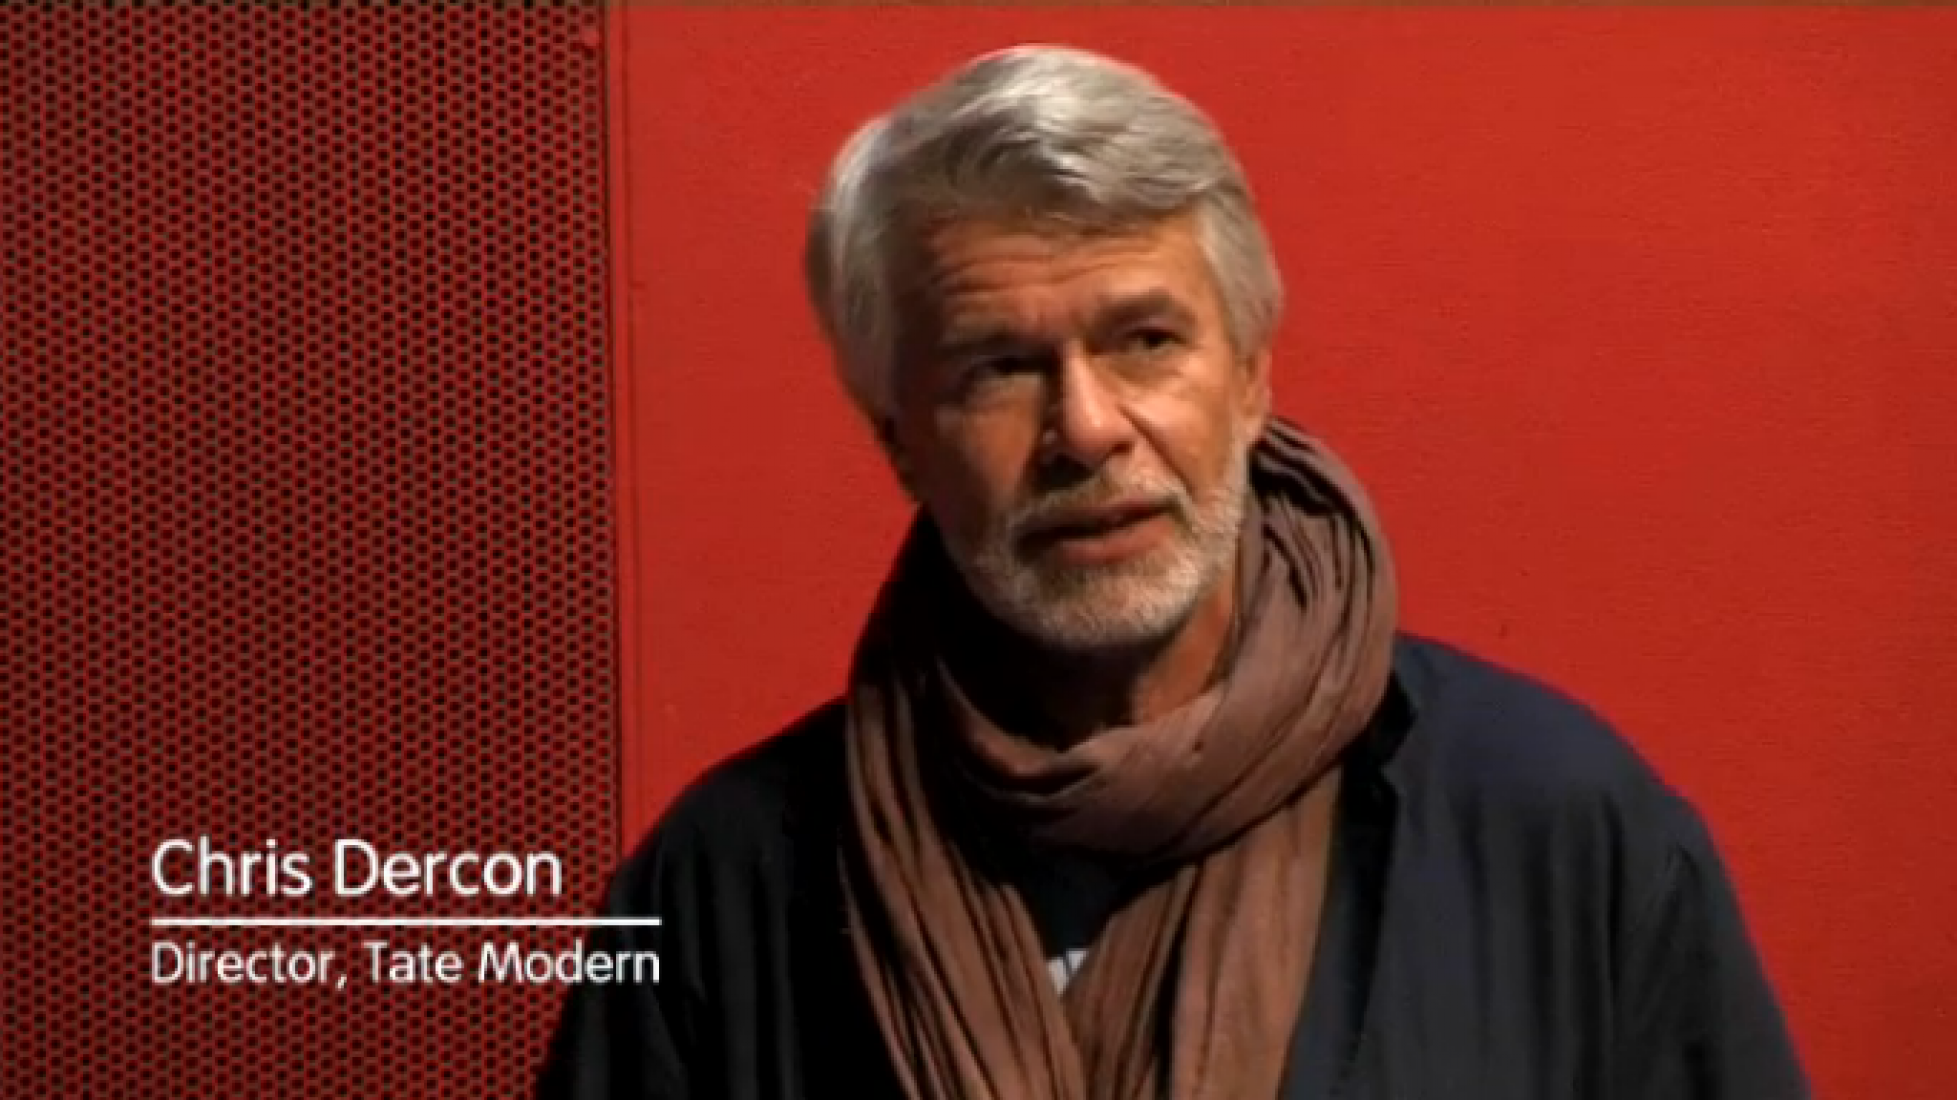 Chris Dercon. Tate Modern Director.